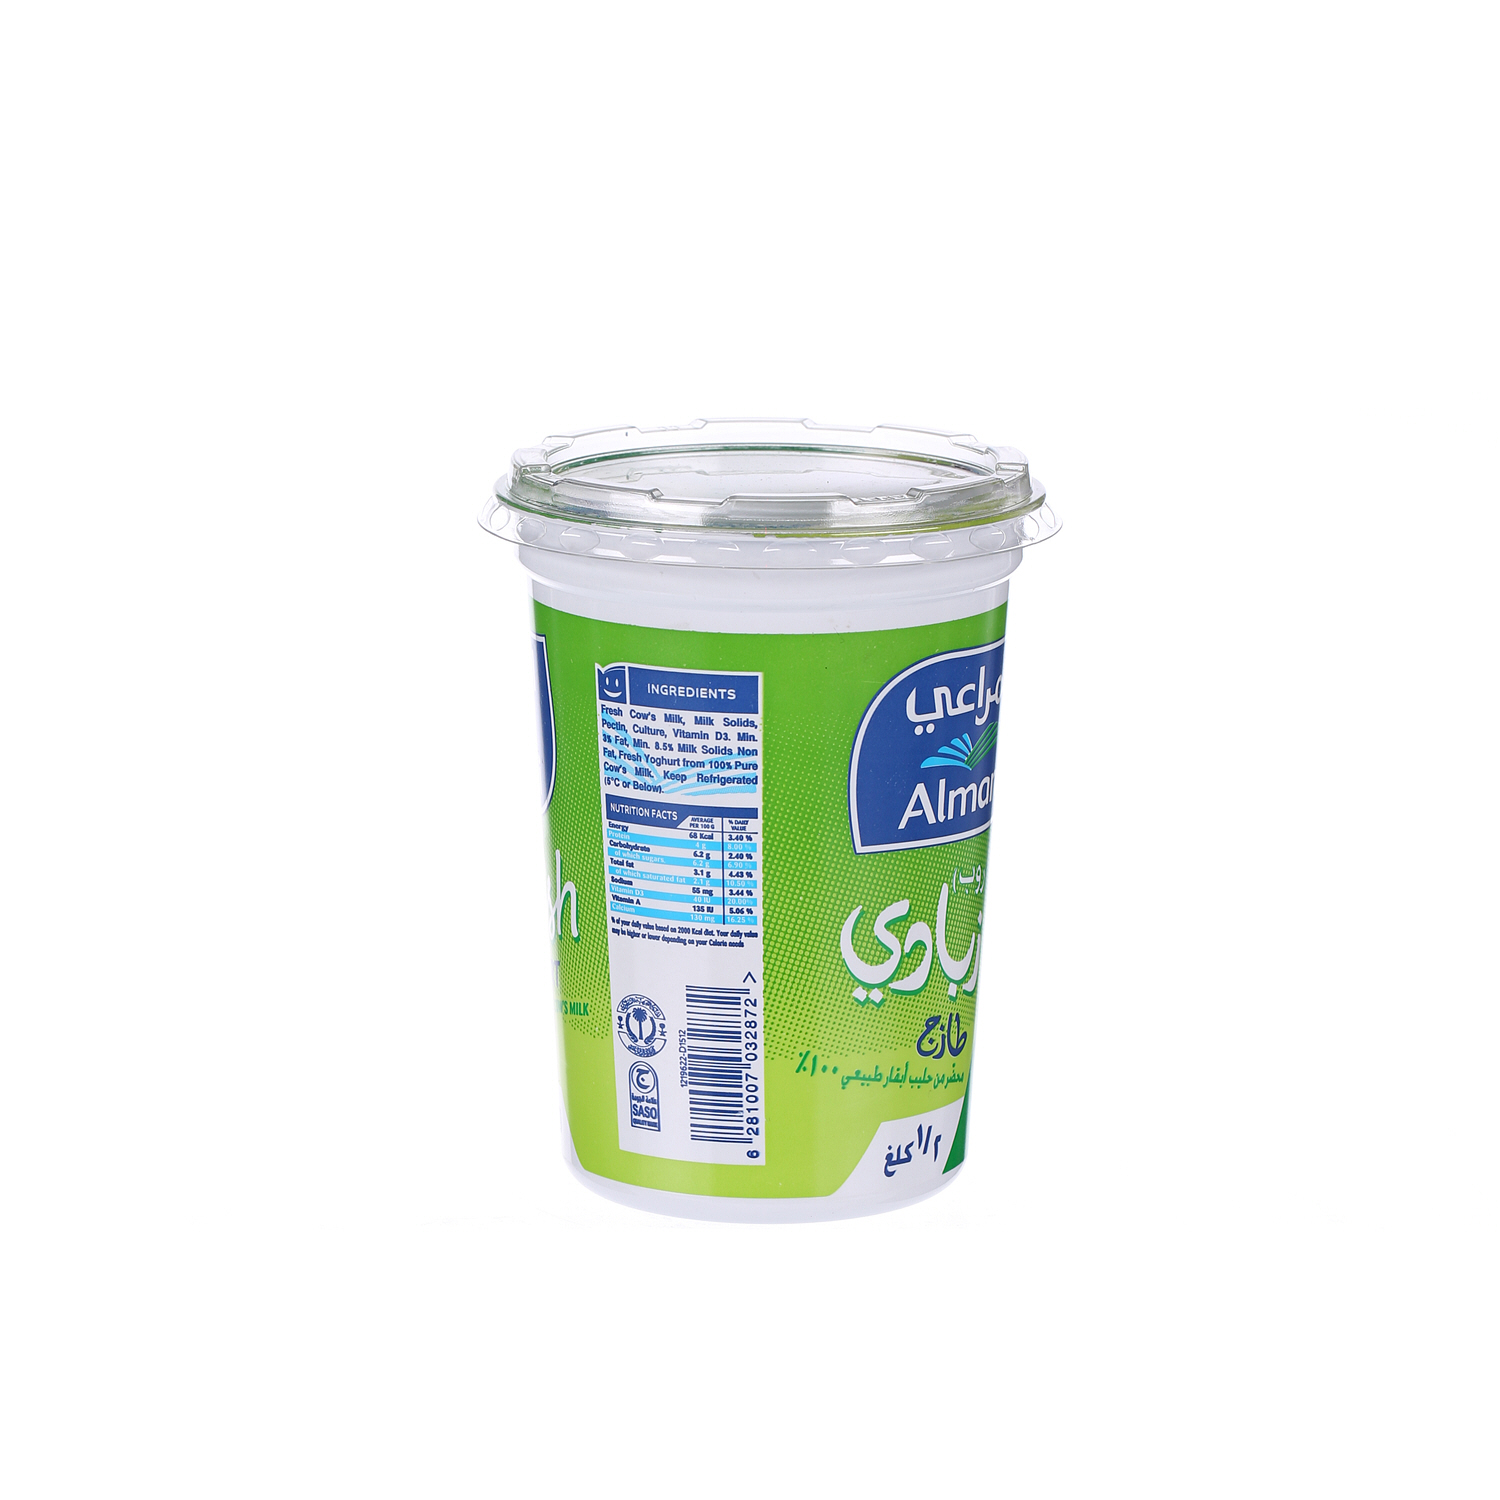 Almarai Fresh Yoghurt Full Fat 500gm